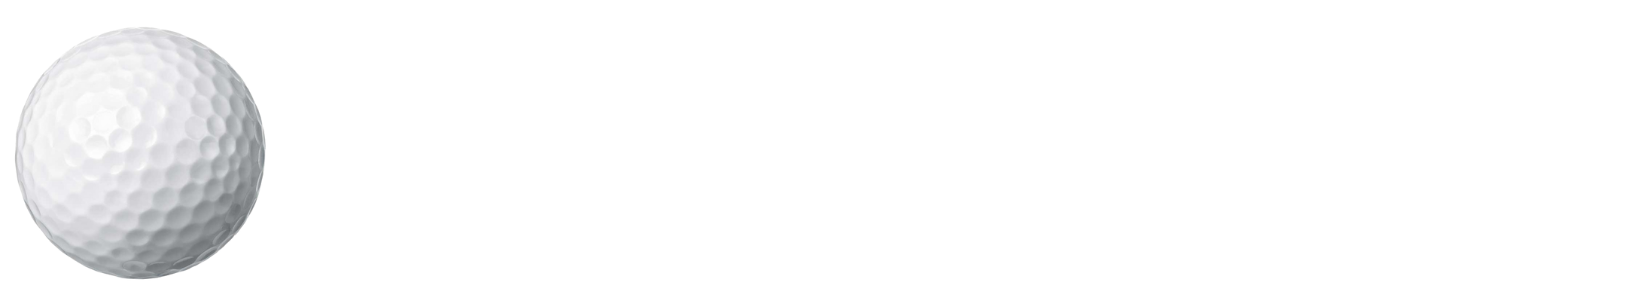 Epic Golf Challenge